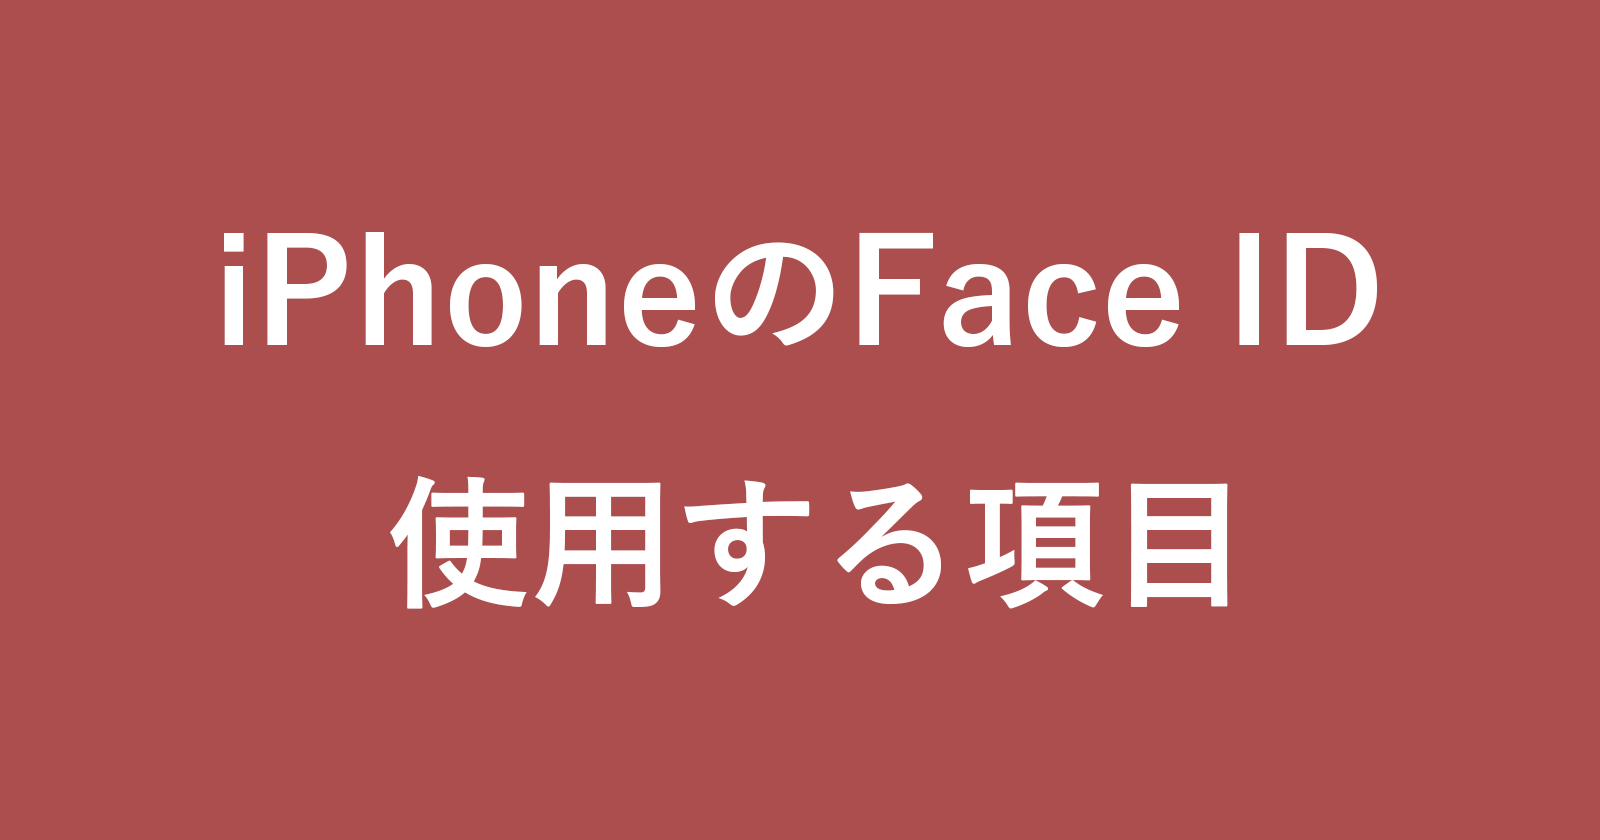 iphone x face id settings